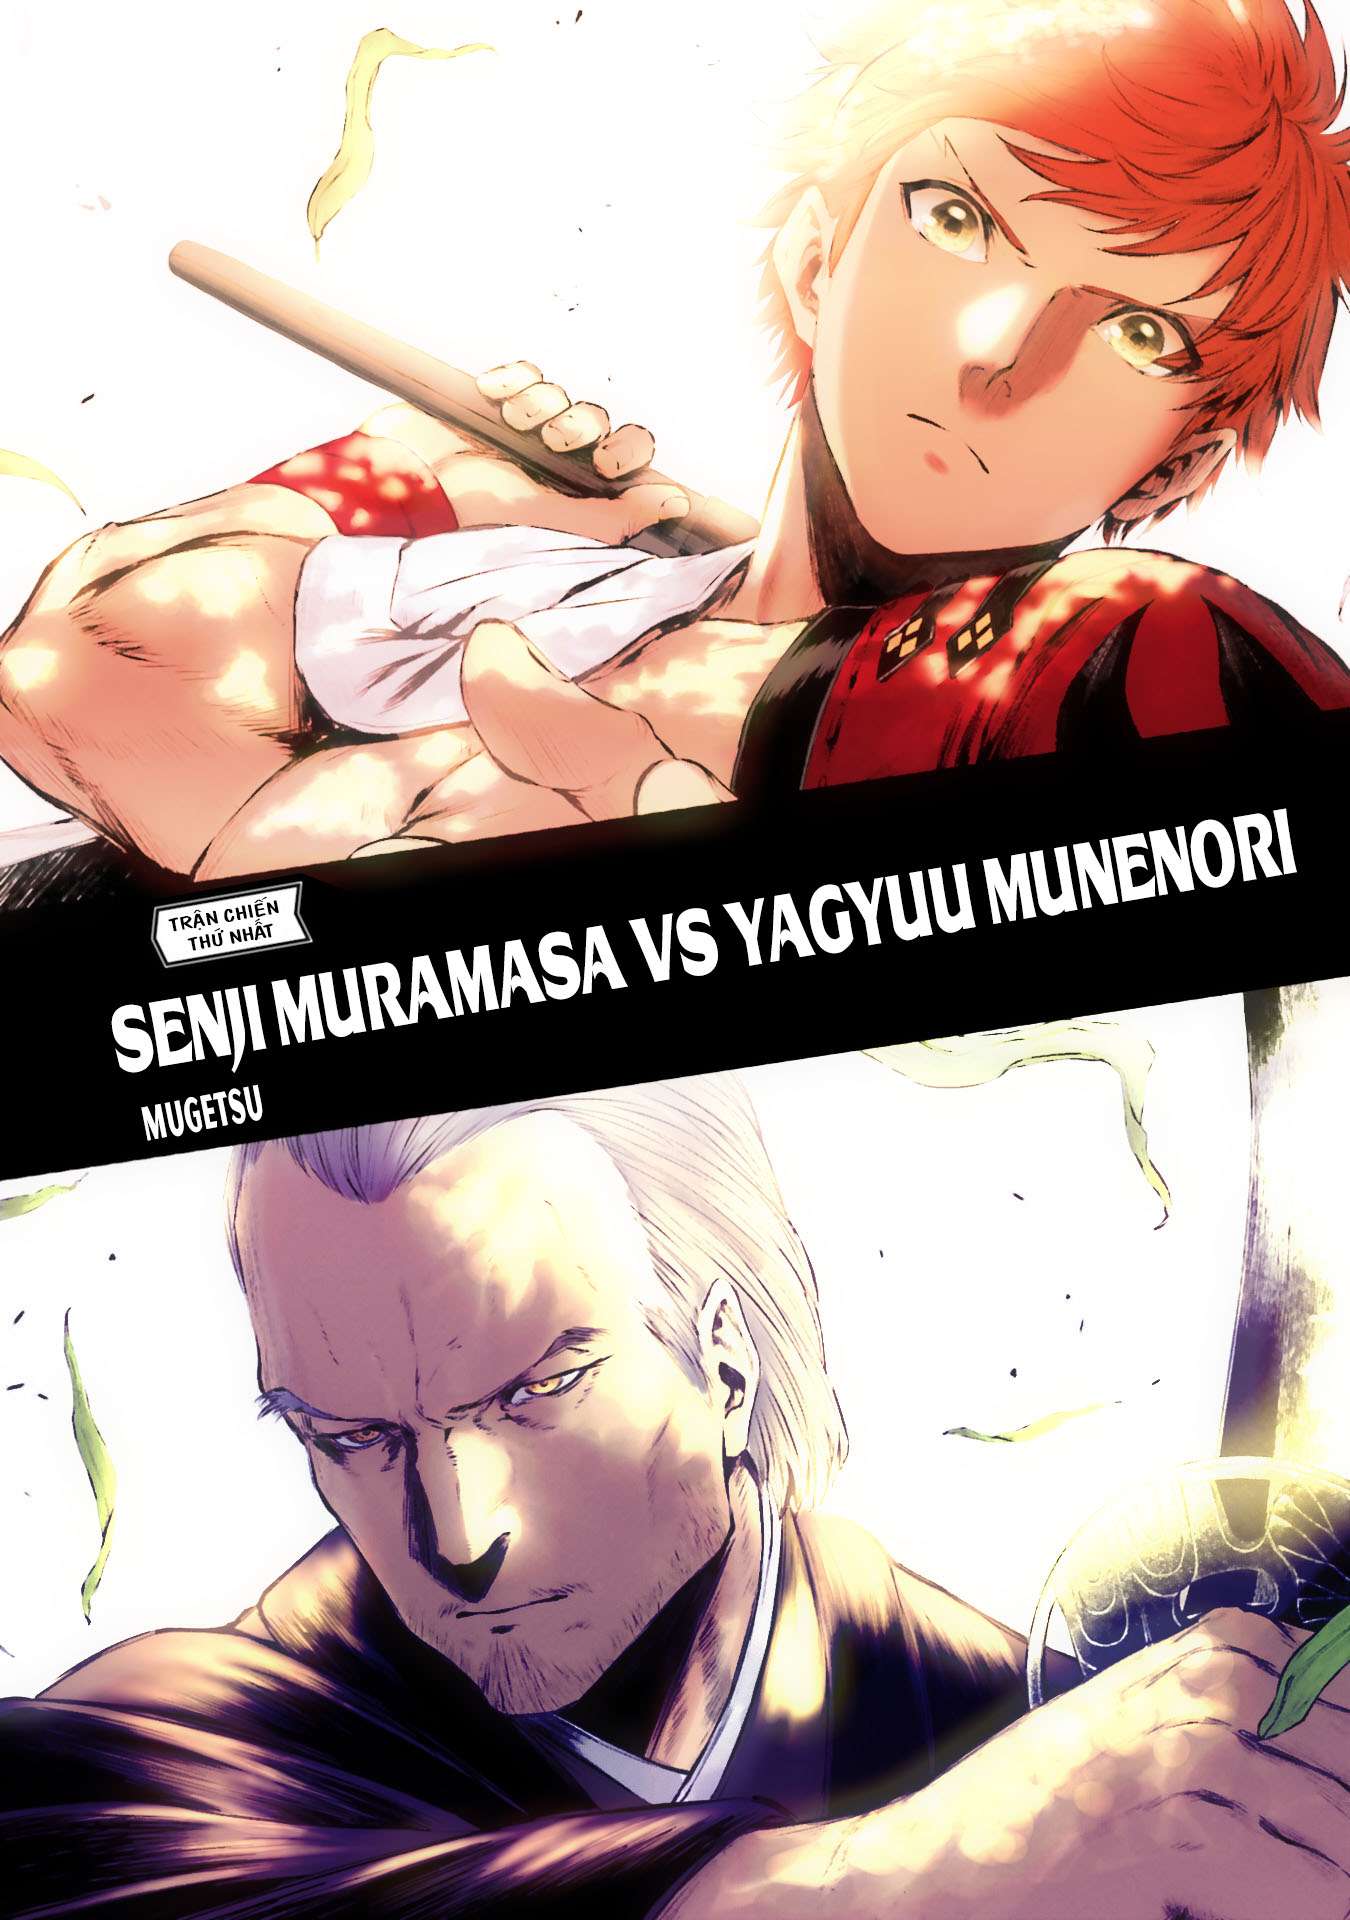 Senji Muramasa VS Yagyū Munenori (Fate / Grand Order Comic Ala Carte PLUS!  SP Showdown!) : r/grandorder